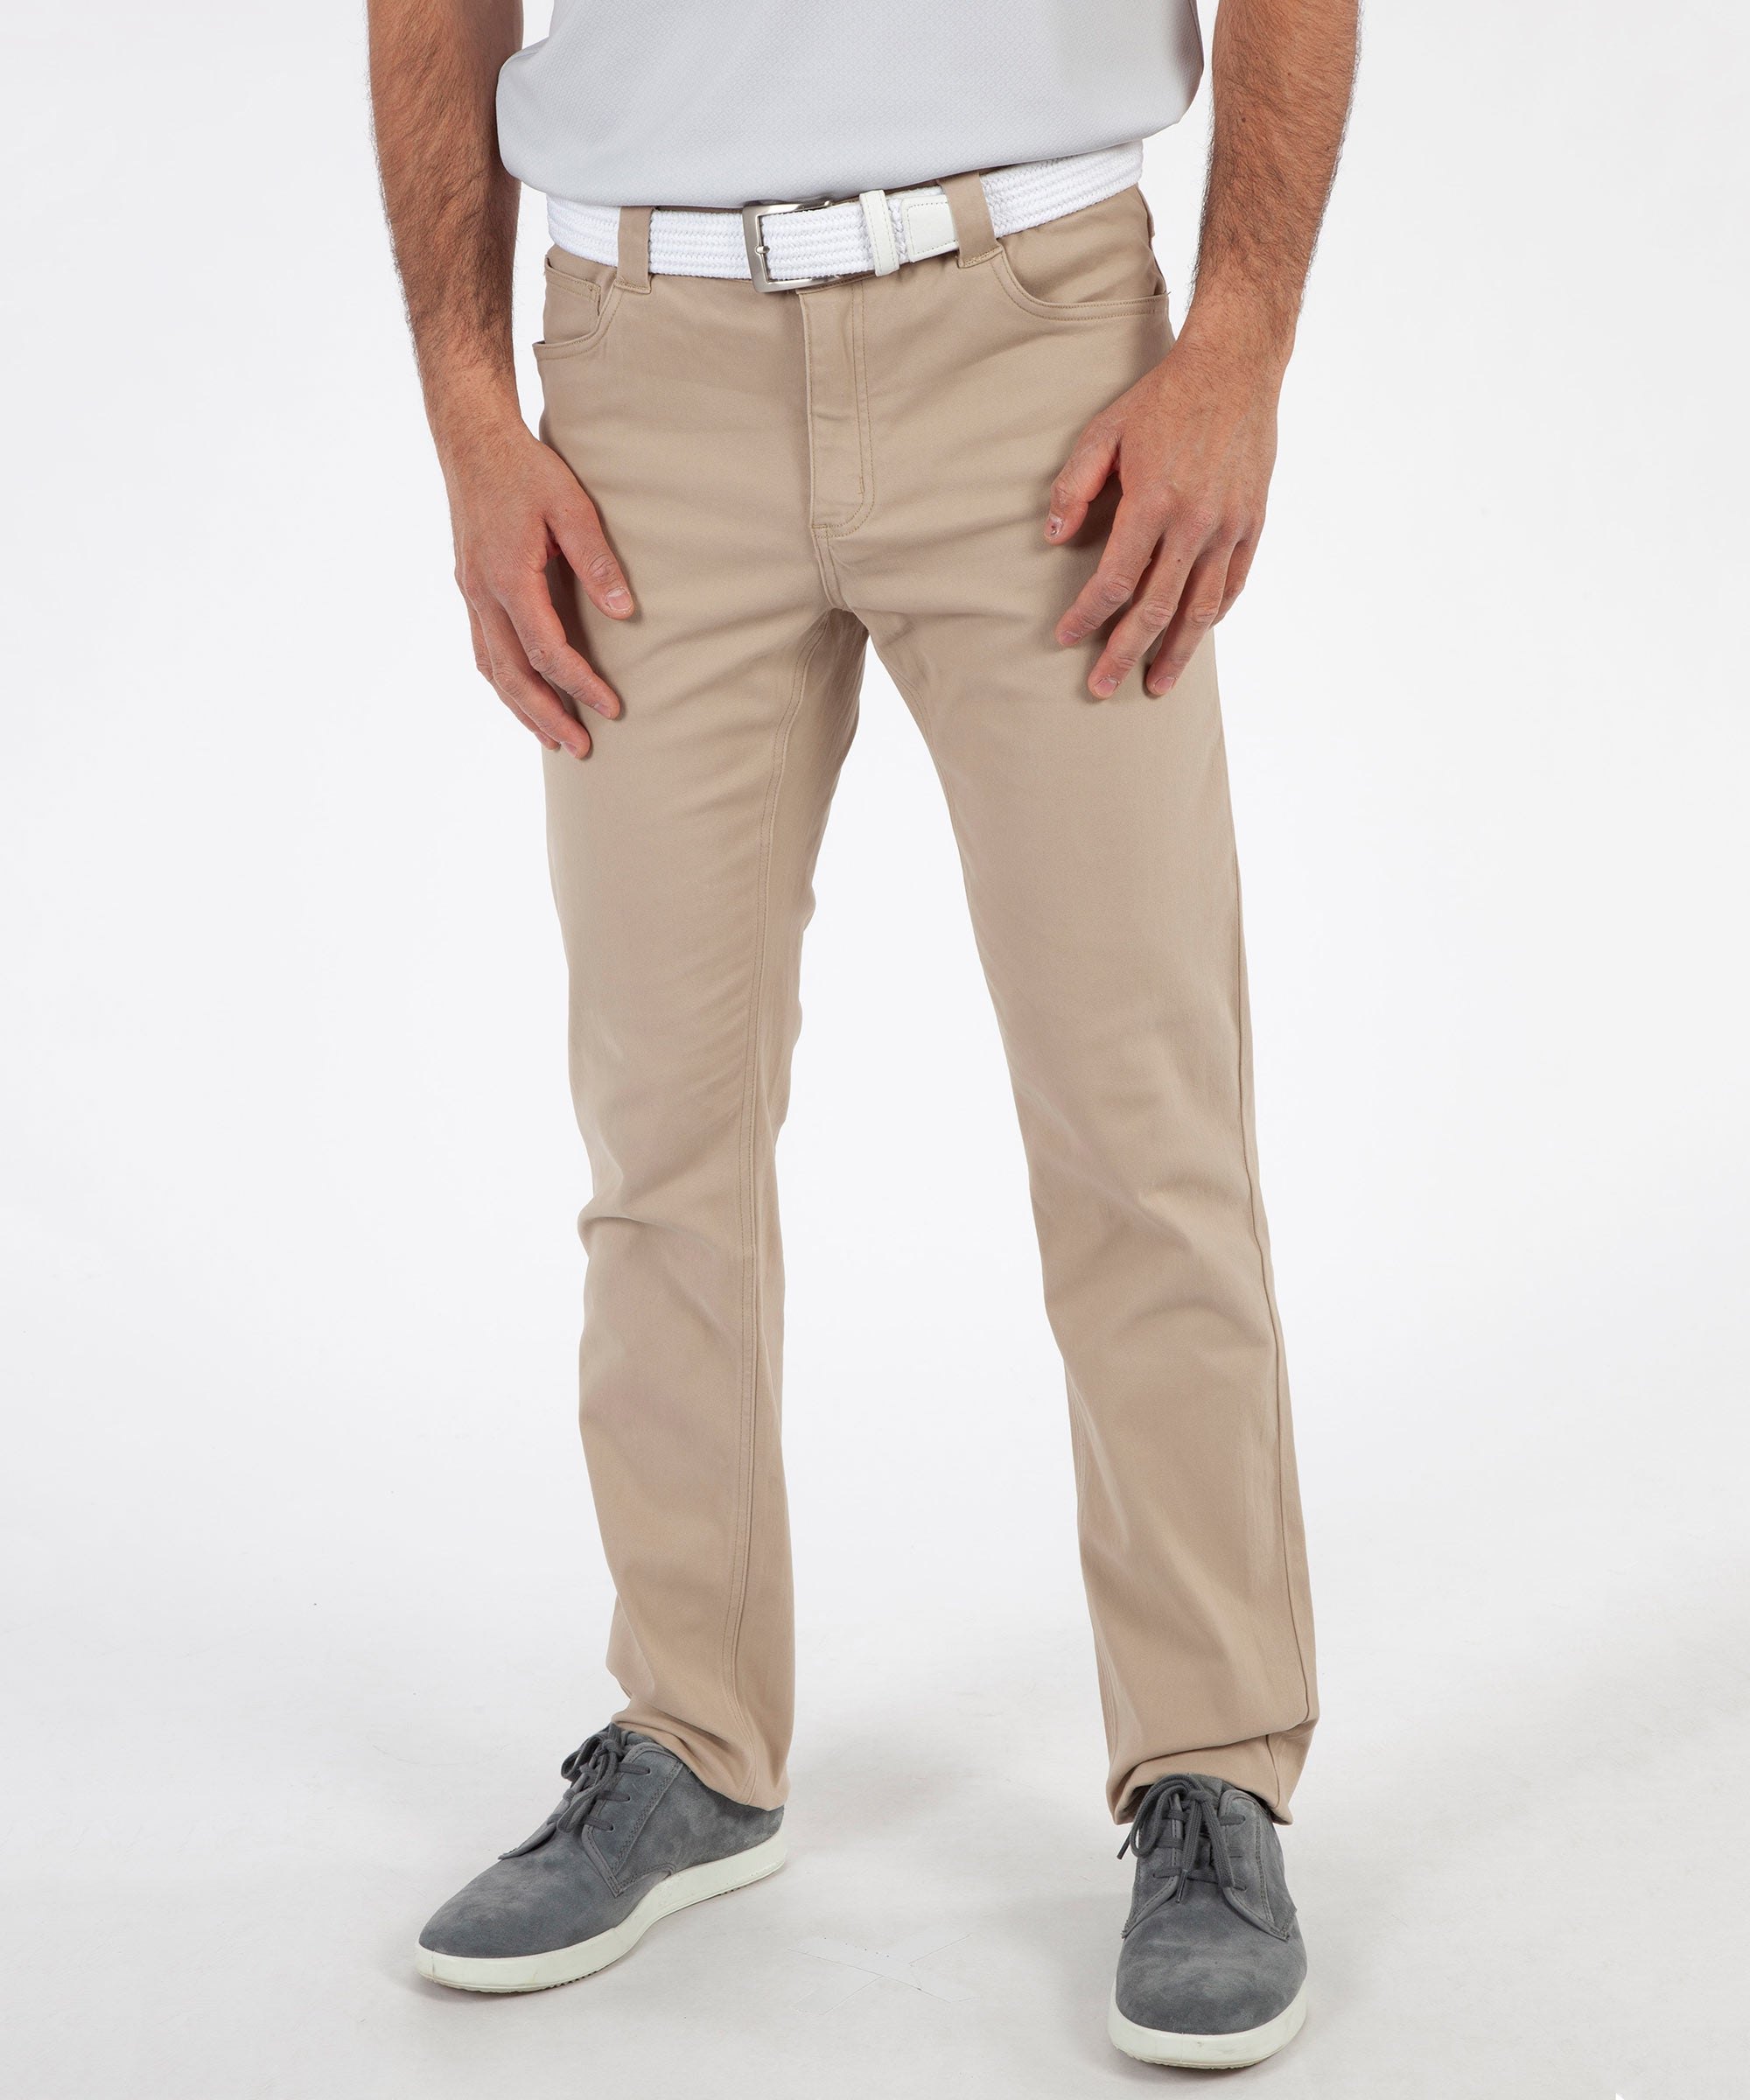 Buy Plaid&Plain Men's Slim Fit Khaki Pants Stretch Cropped Chino Skinny  Pants, Khaki, 27W x 27L at Amazon.in